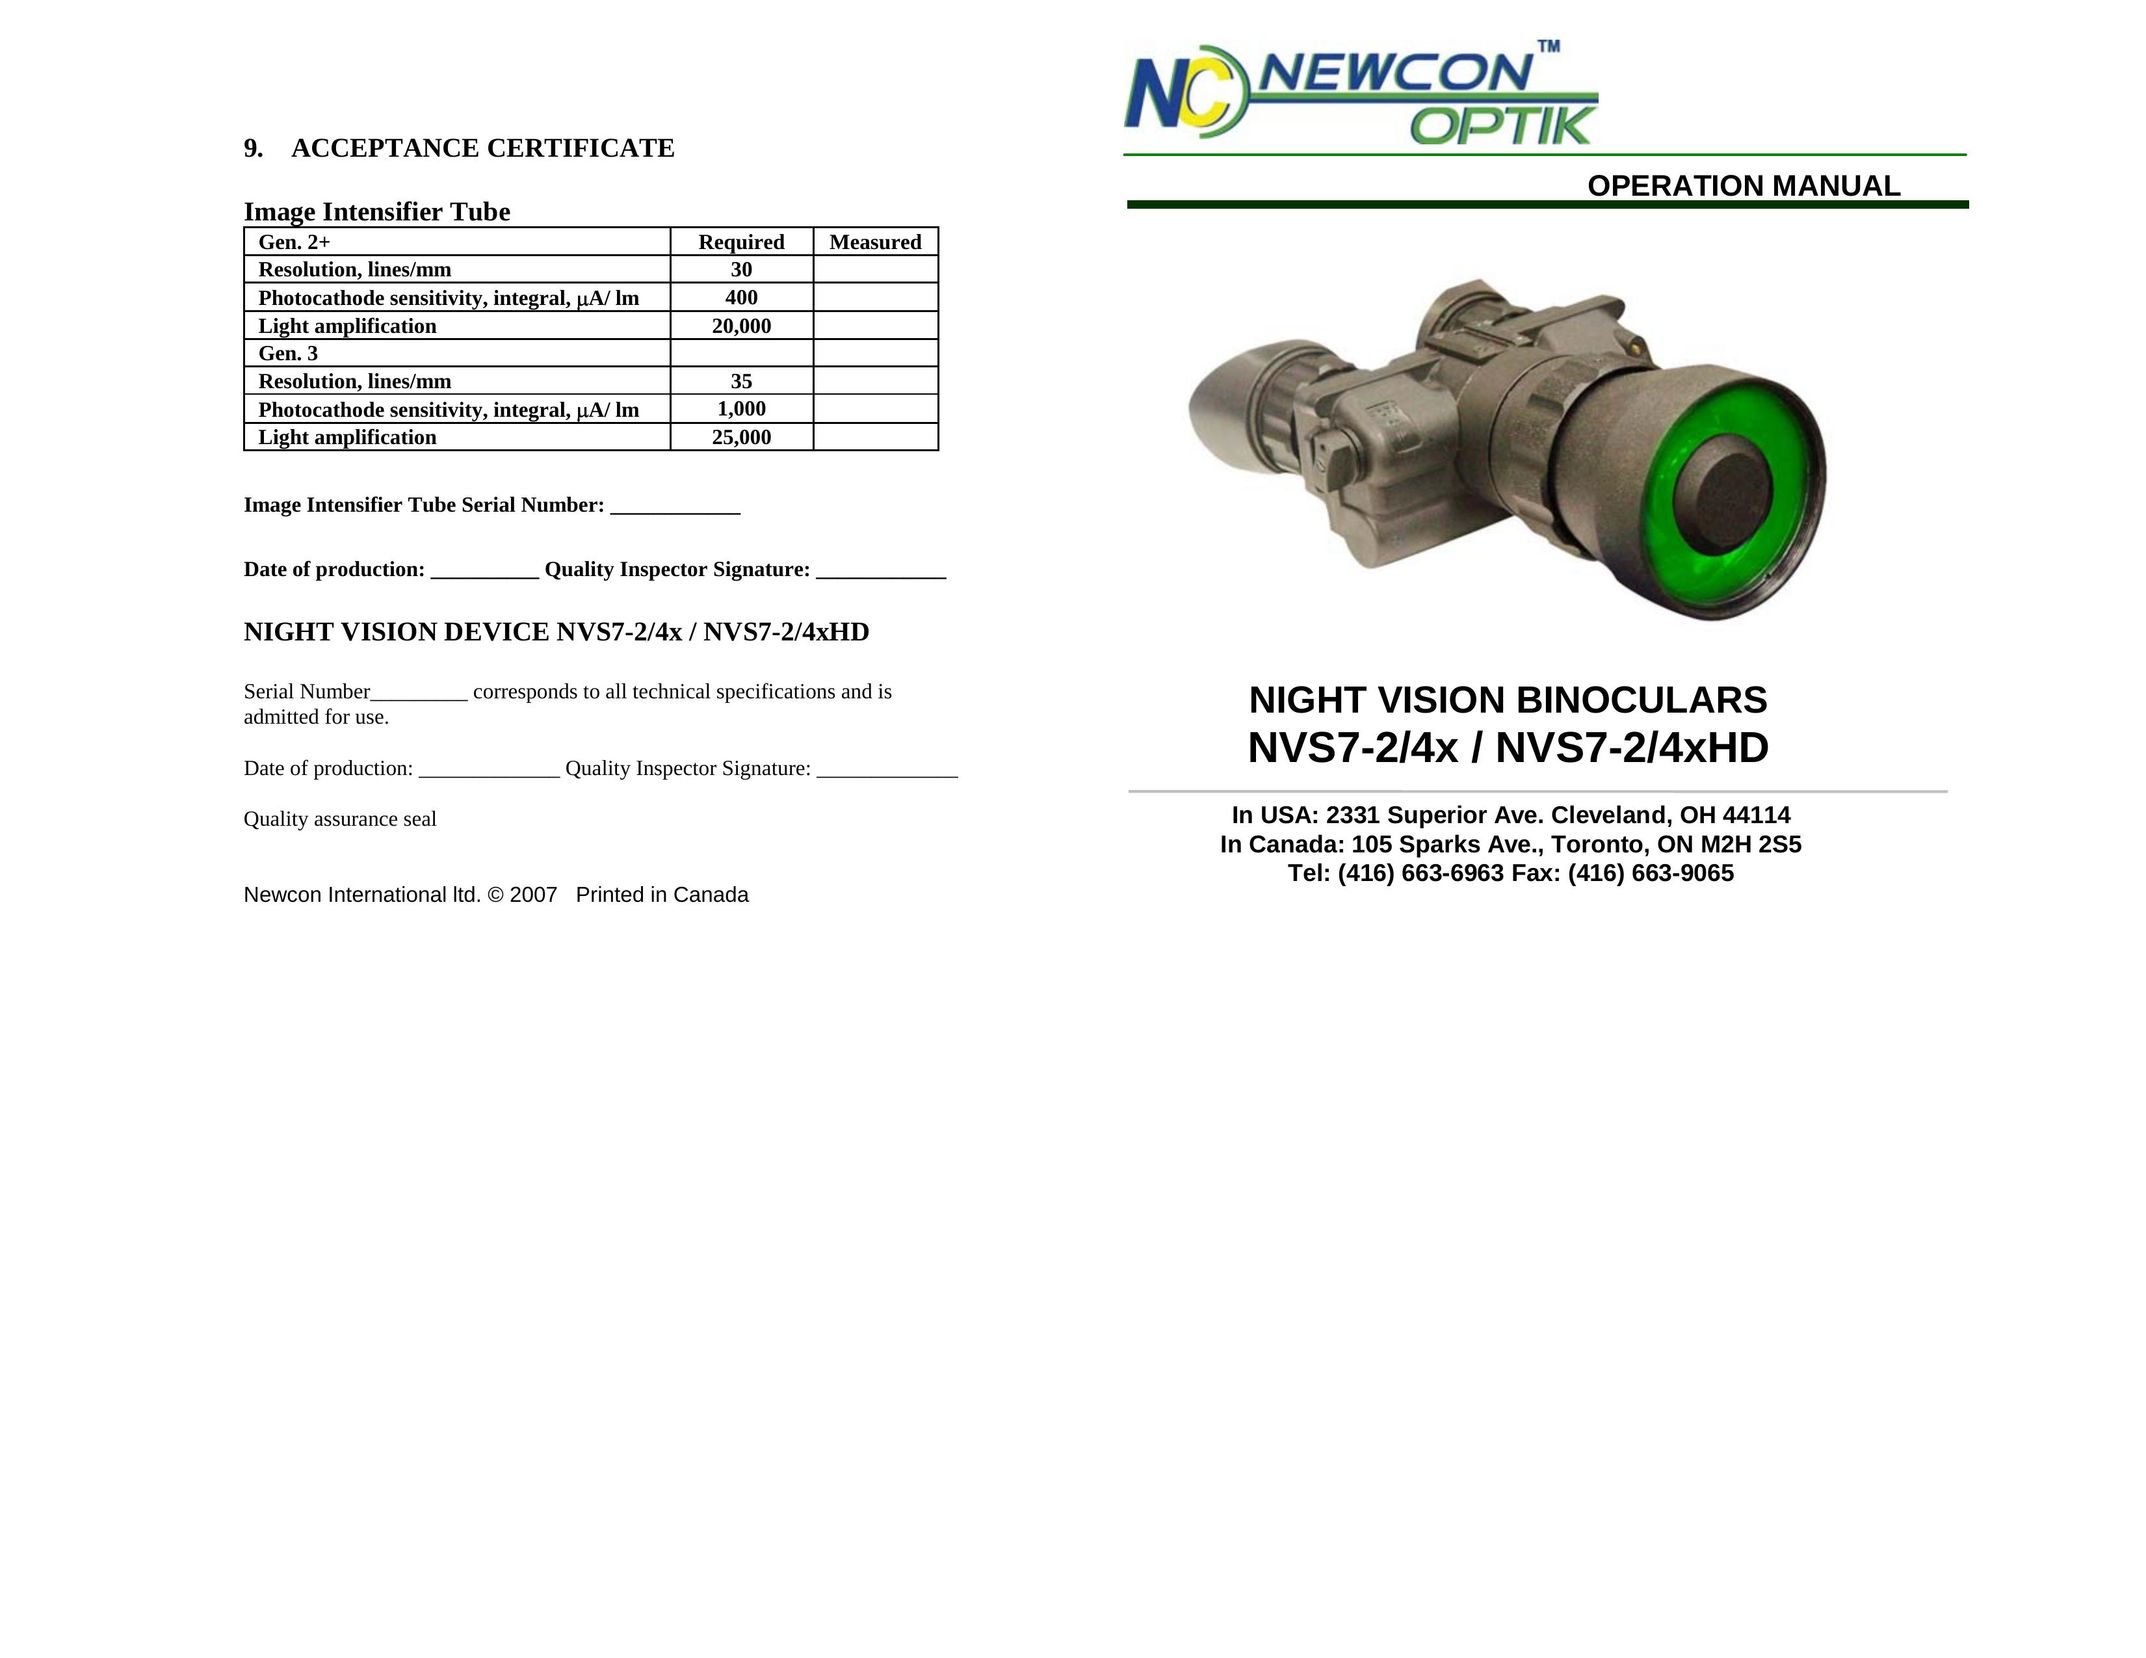 Newcon Optik NVS7-2/4xHD Binoculars User Manual